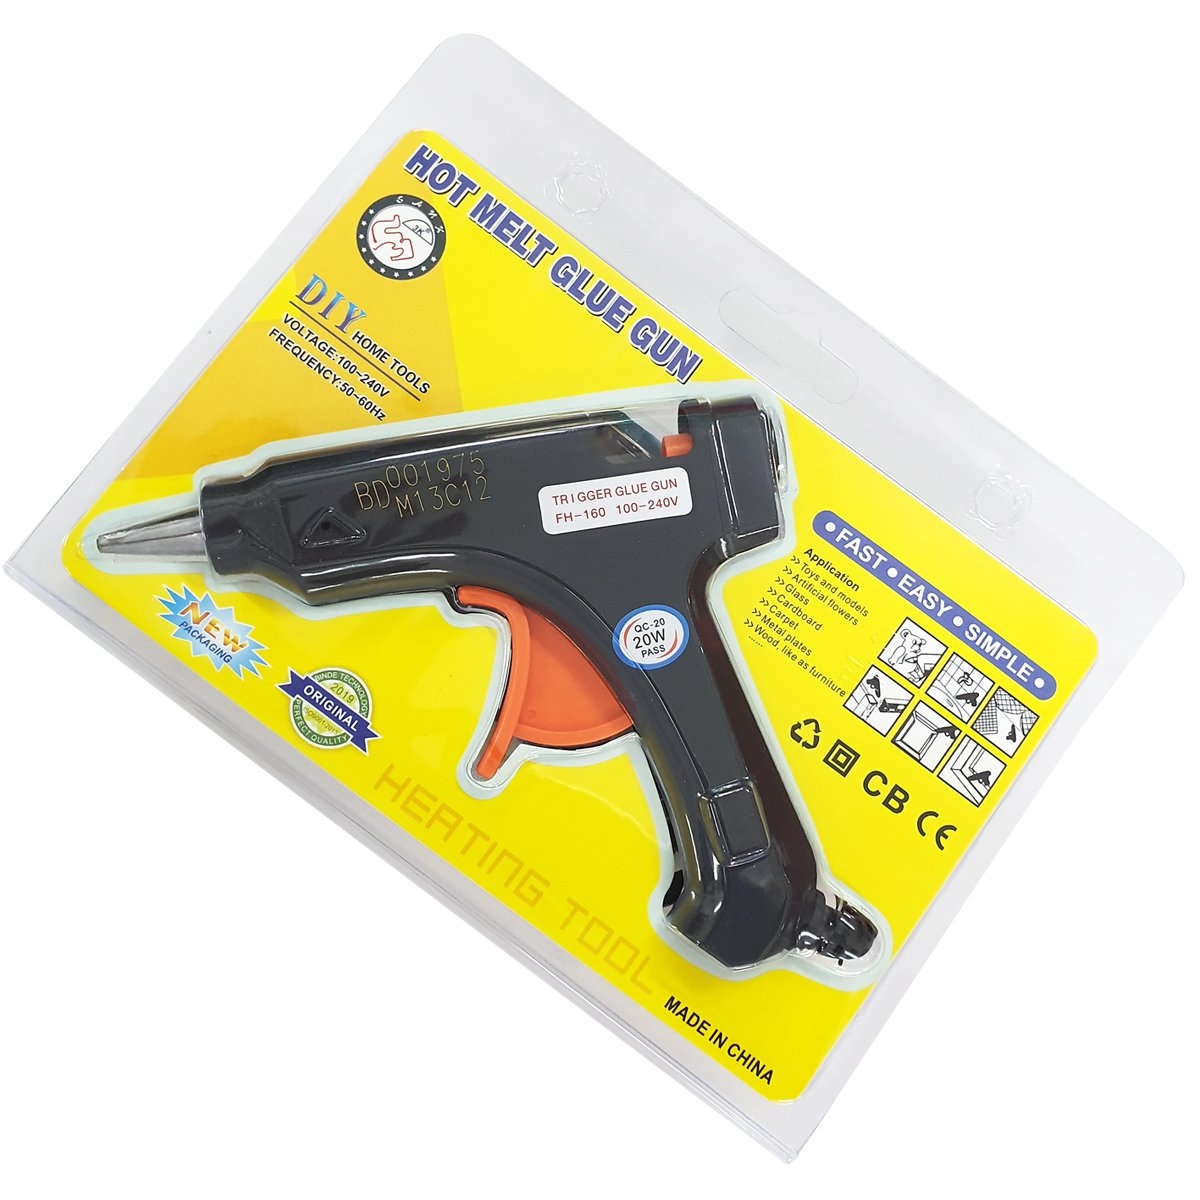 Hot Glue Gun - 100-240v 20w Hot Melt Glue Gun Professional Mini